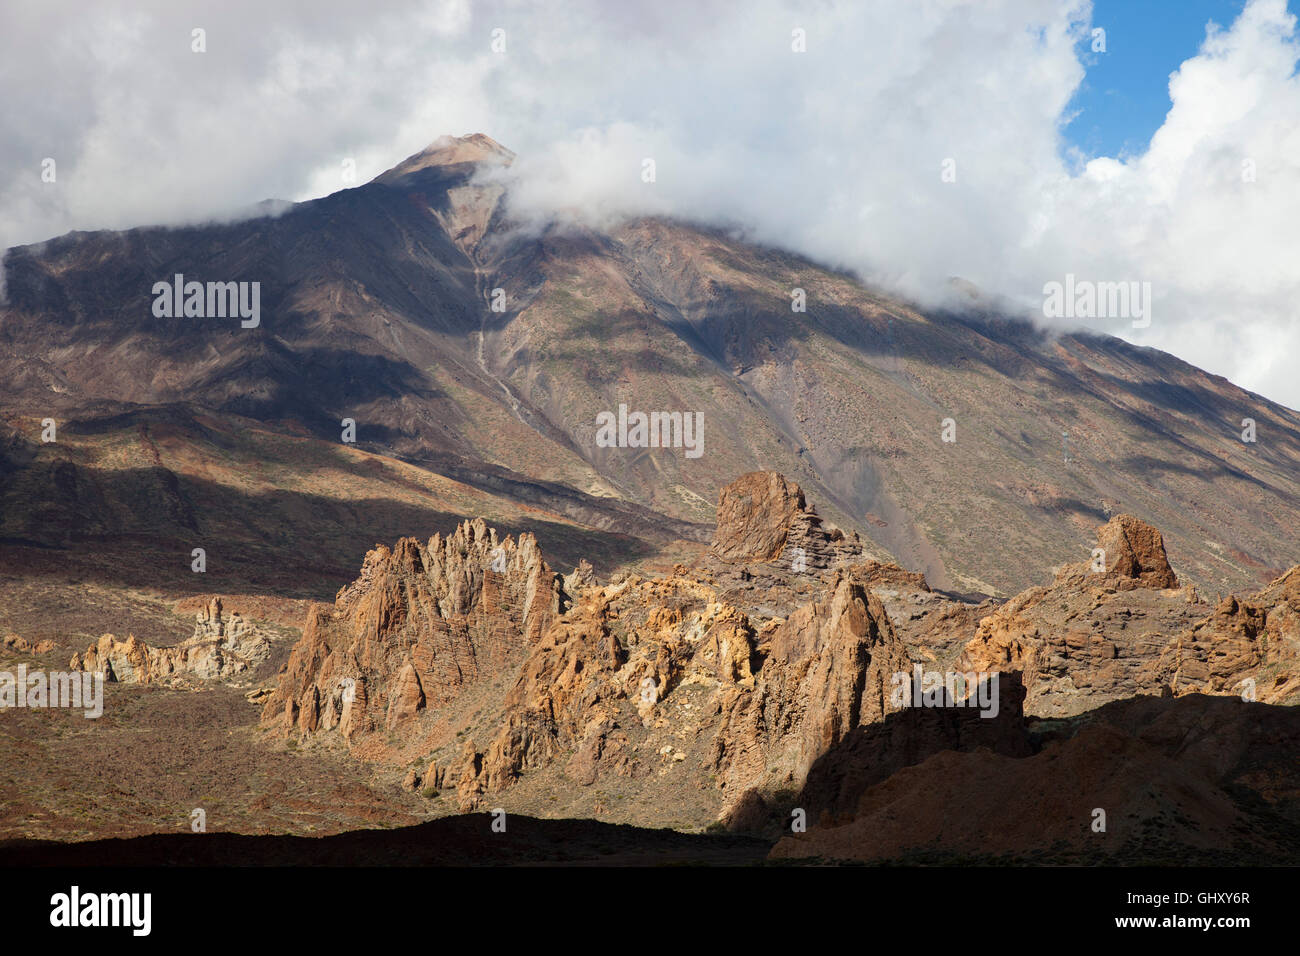 Los Roques, Llano de Ucanca and Teide volcano, Tenerife island, Canary archipelago, Spain, Europe Stock Photo